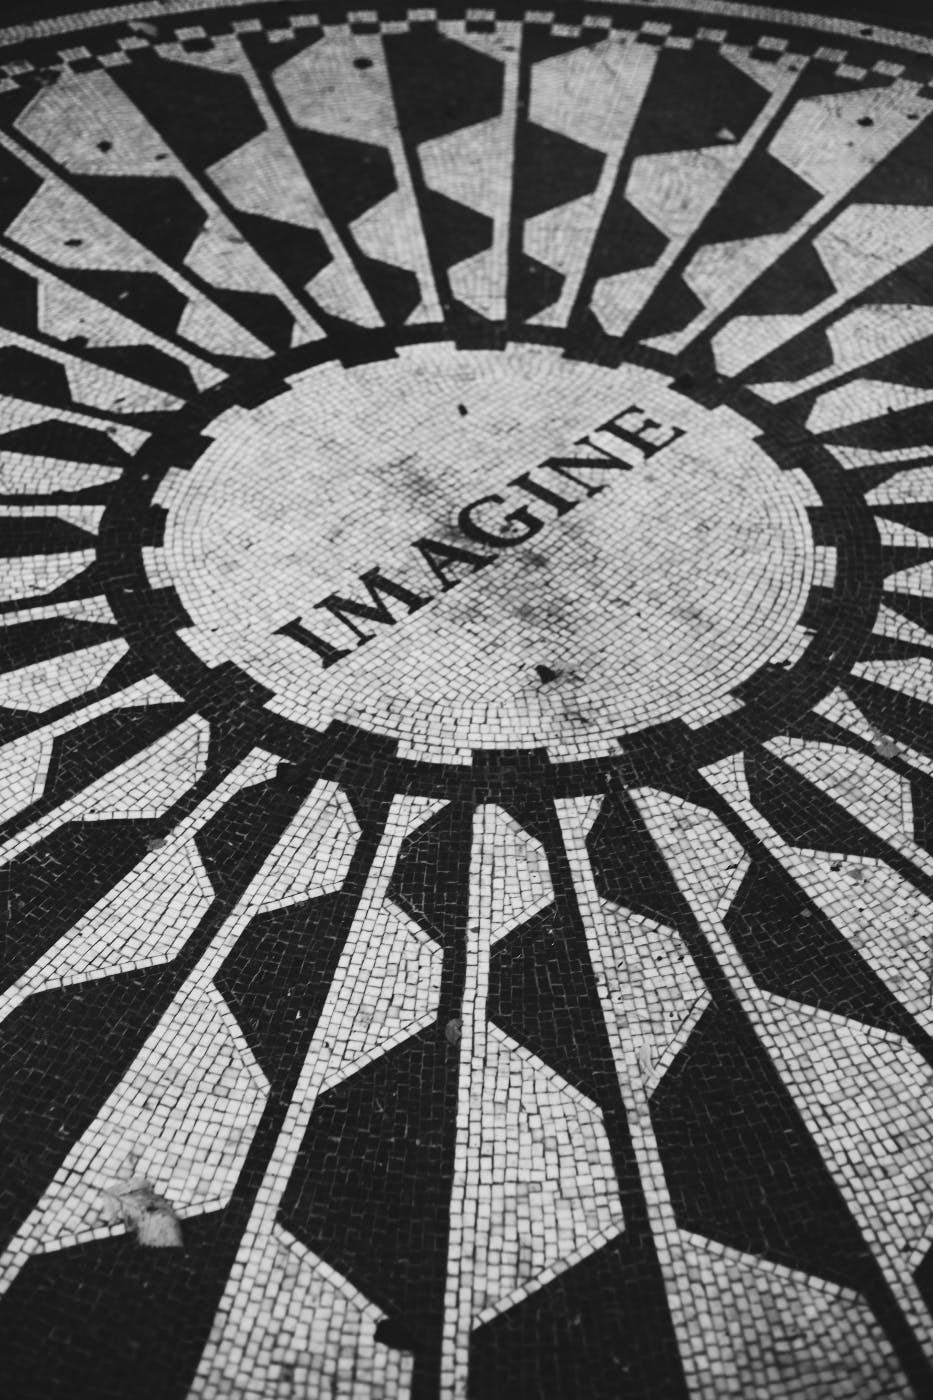 The black and white imagine mosaic at John Lennon's grave